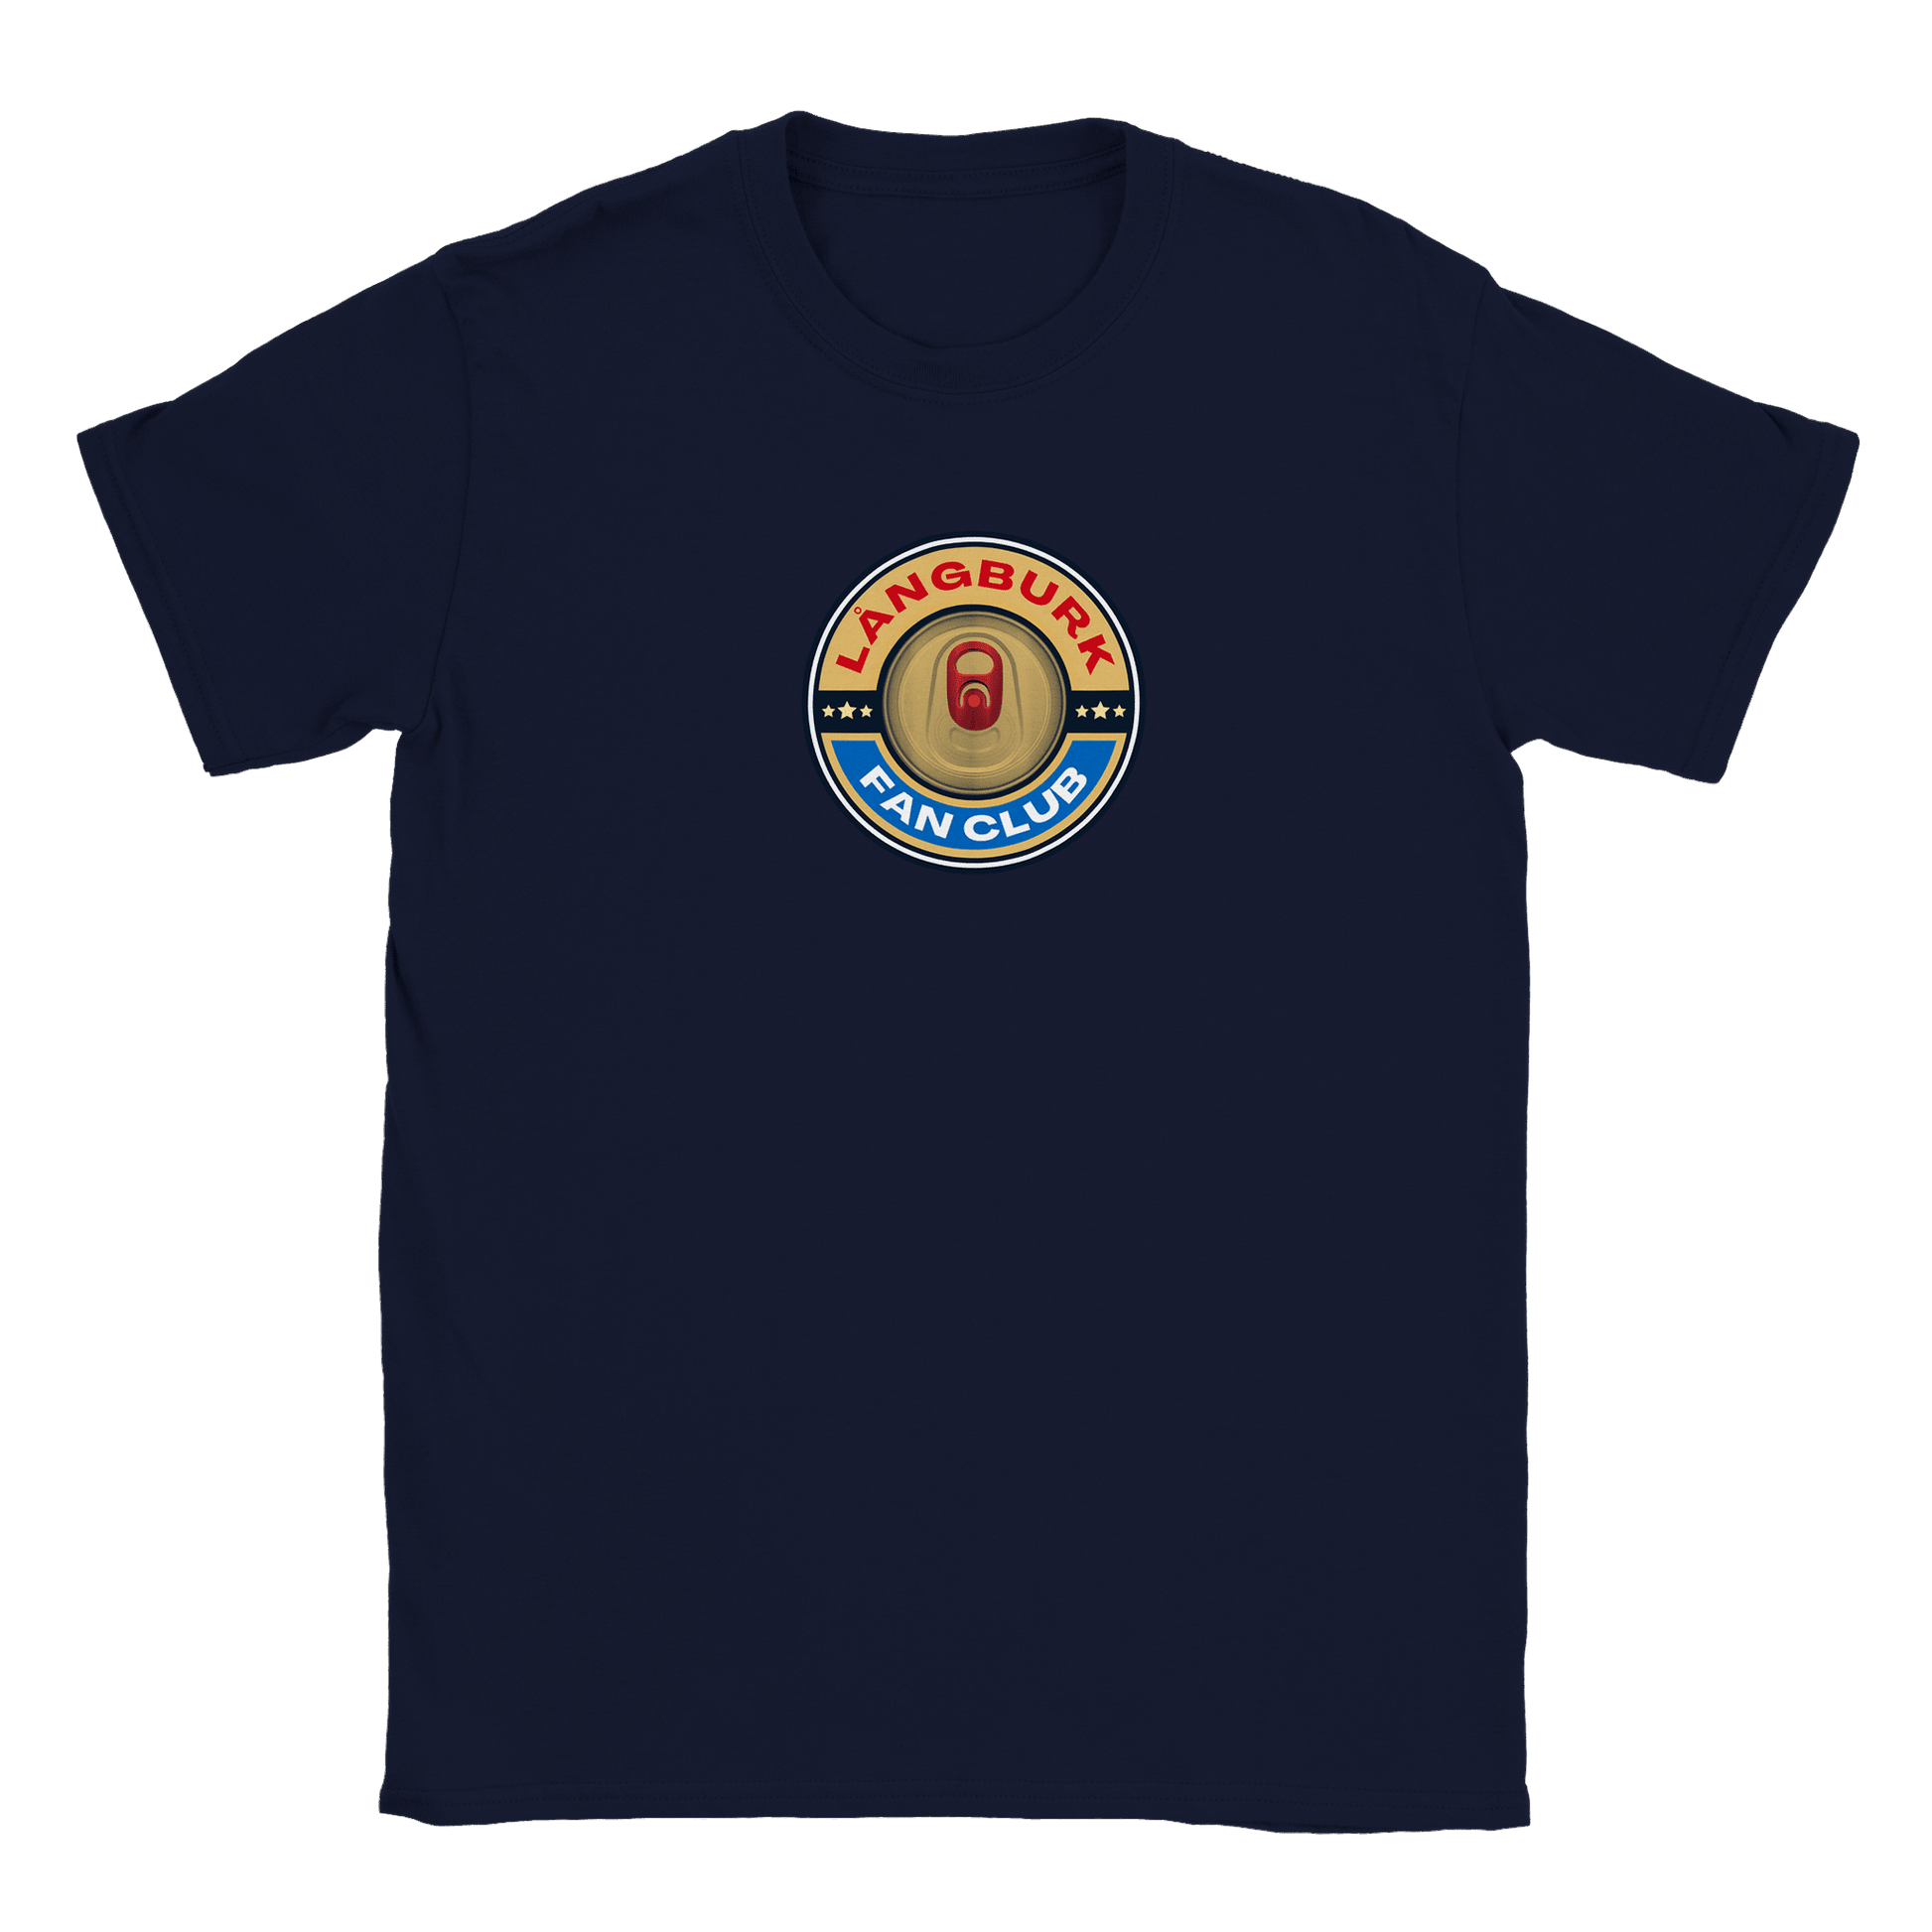 Långburk Fan Club Norrland Edition - T-shirt Navy